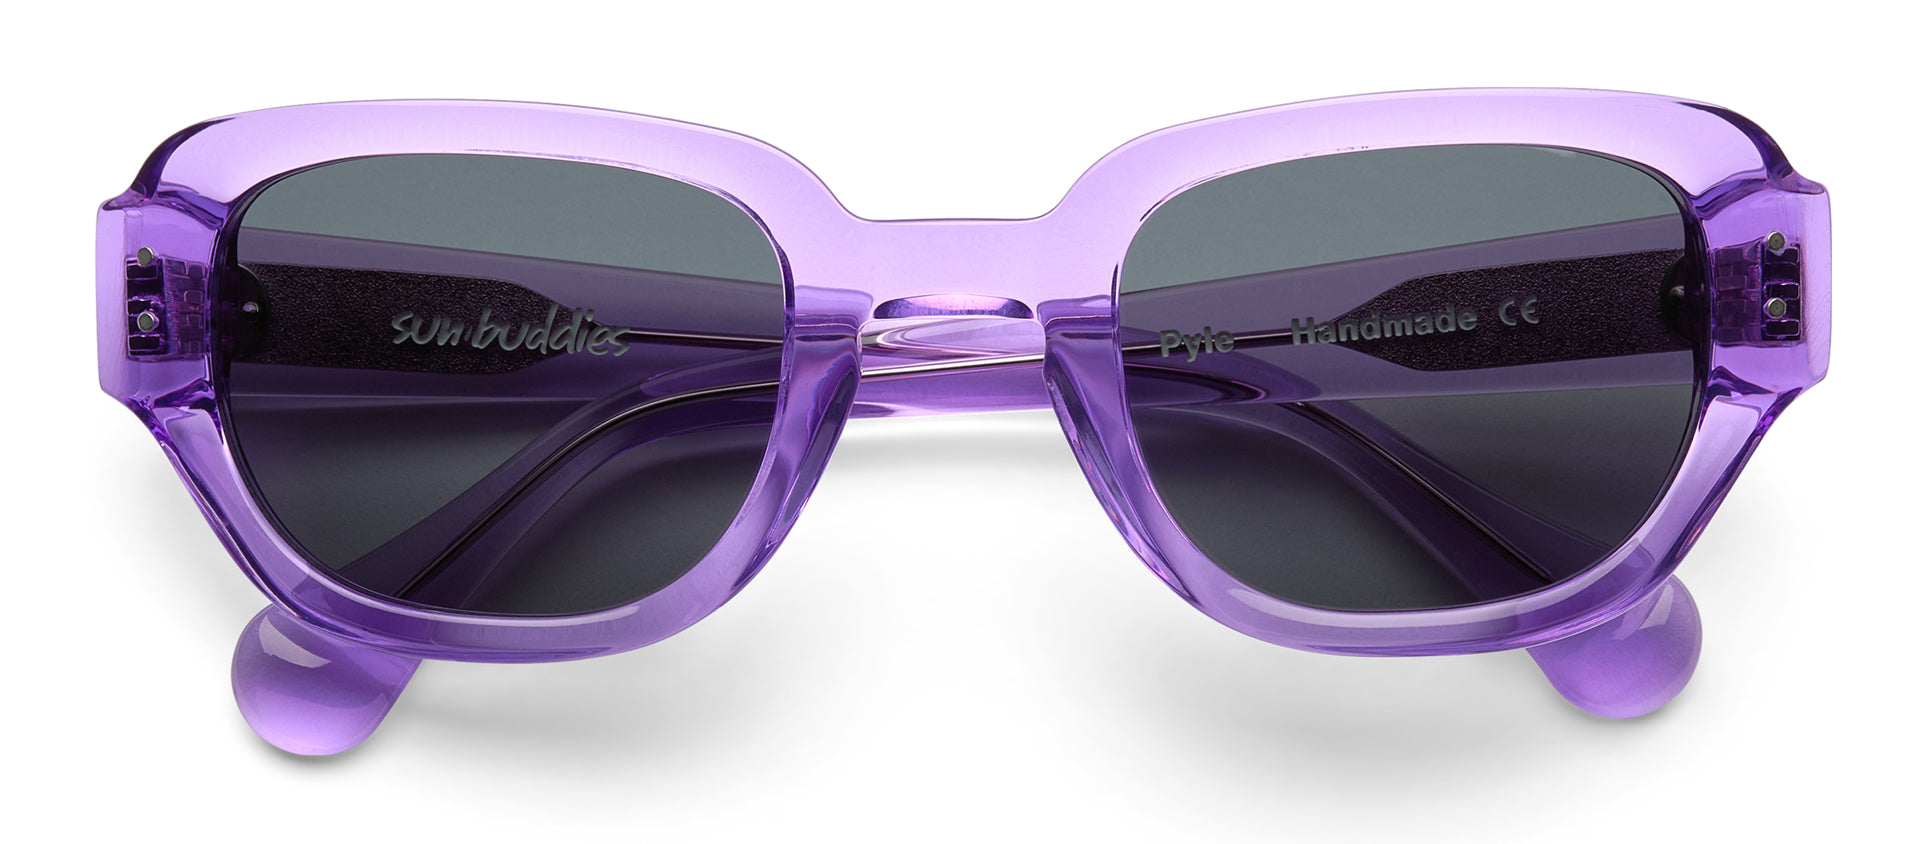 Sunglasses – Sun Buddies Eyewear